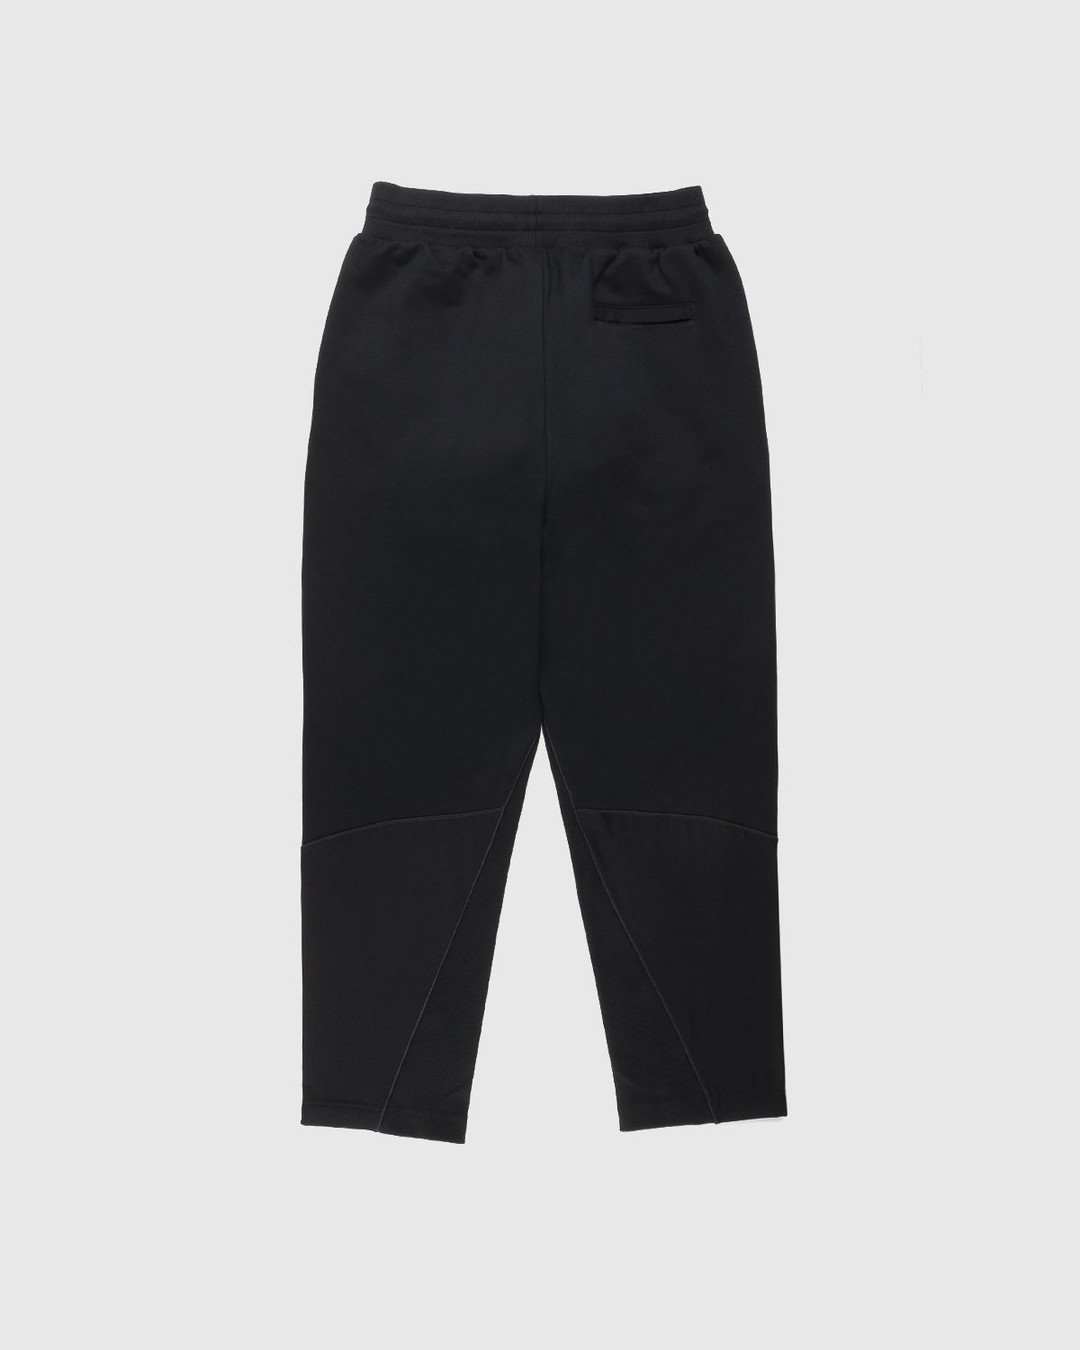 A-Cold-Wall* – Granular Sweatpants Black - Pants - Black - Image 2